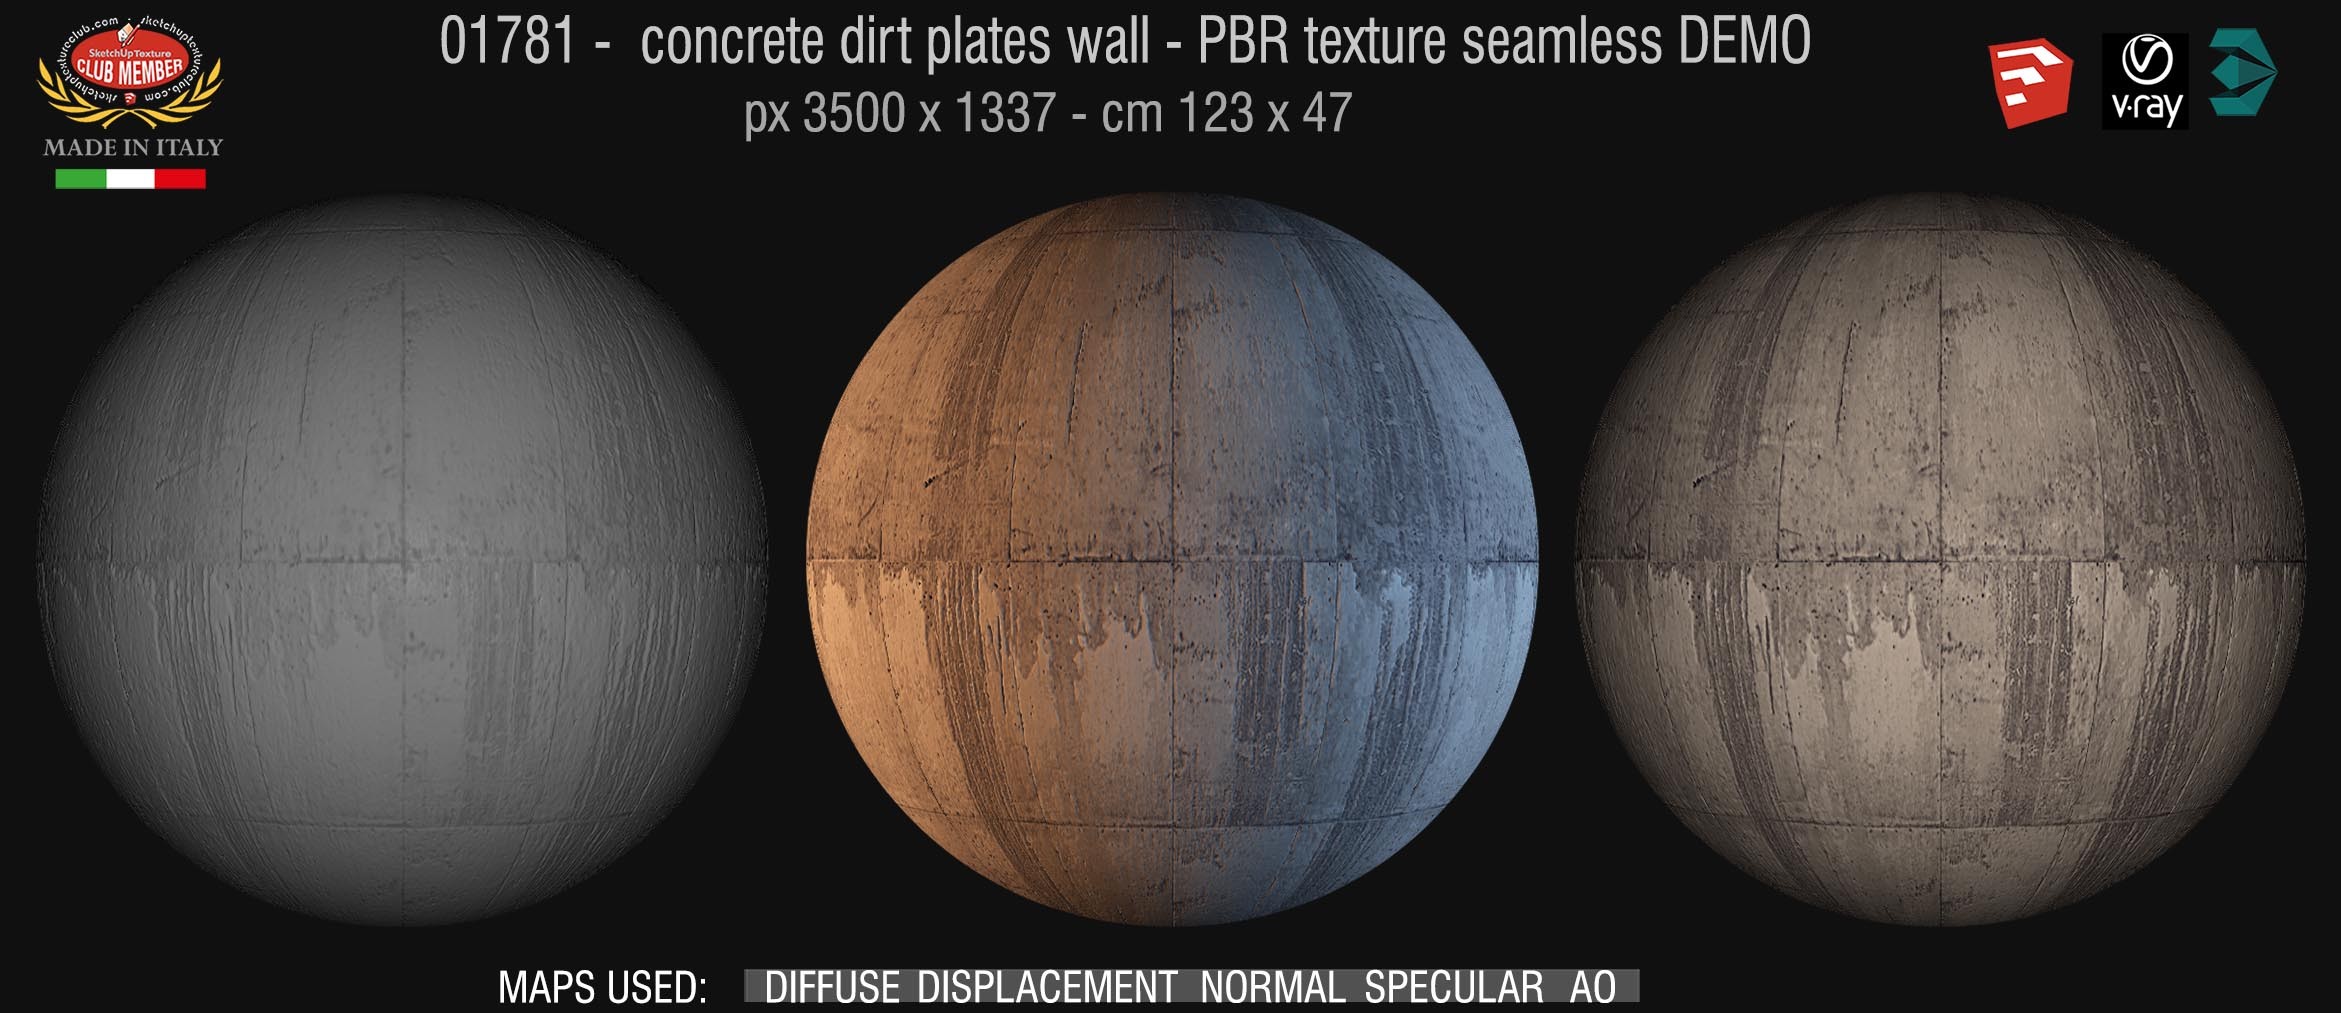 01781 concrete dirt plates wall PBR texture seamless DEMO